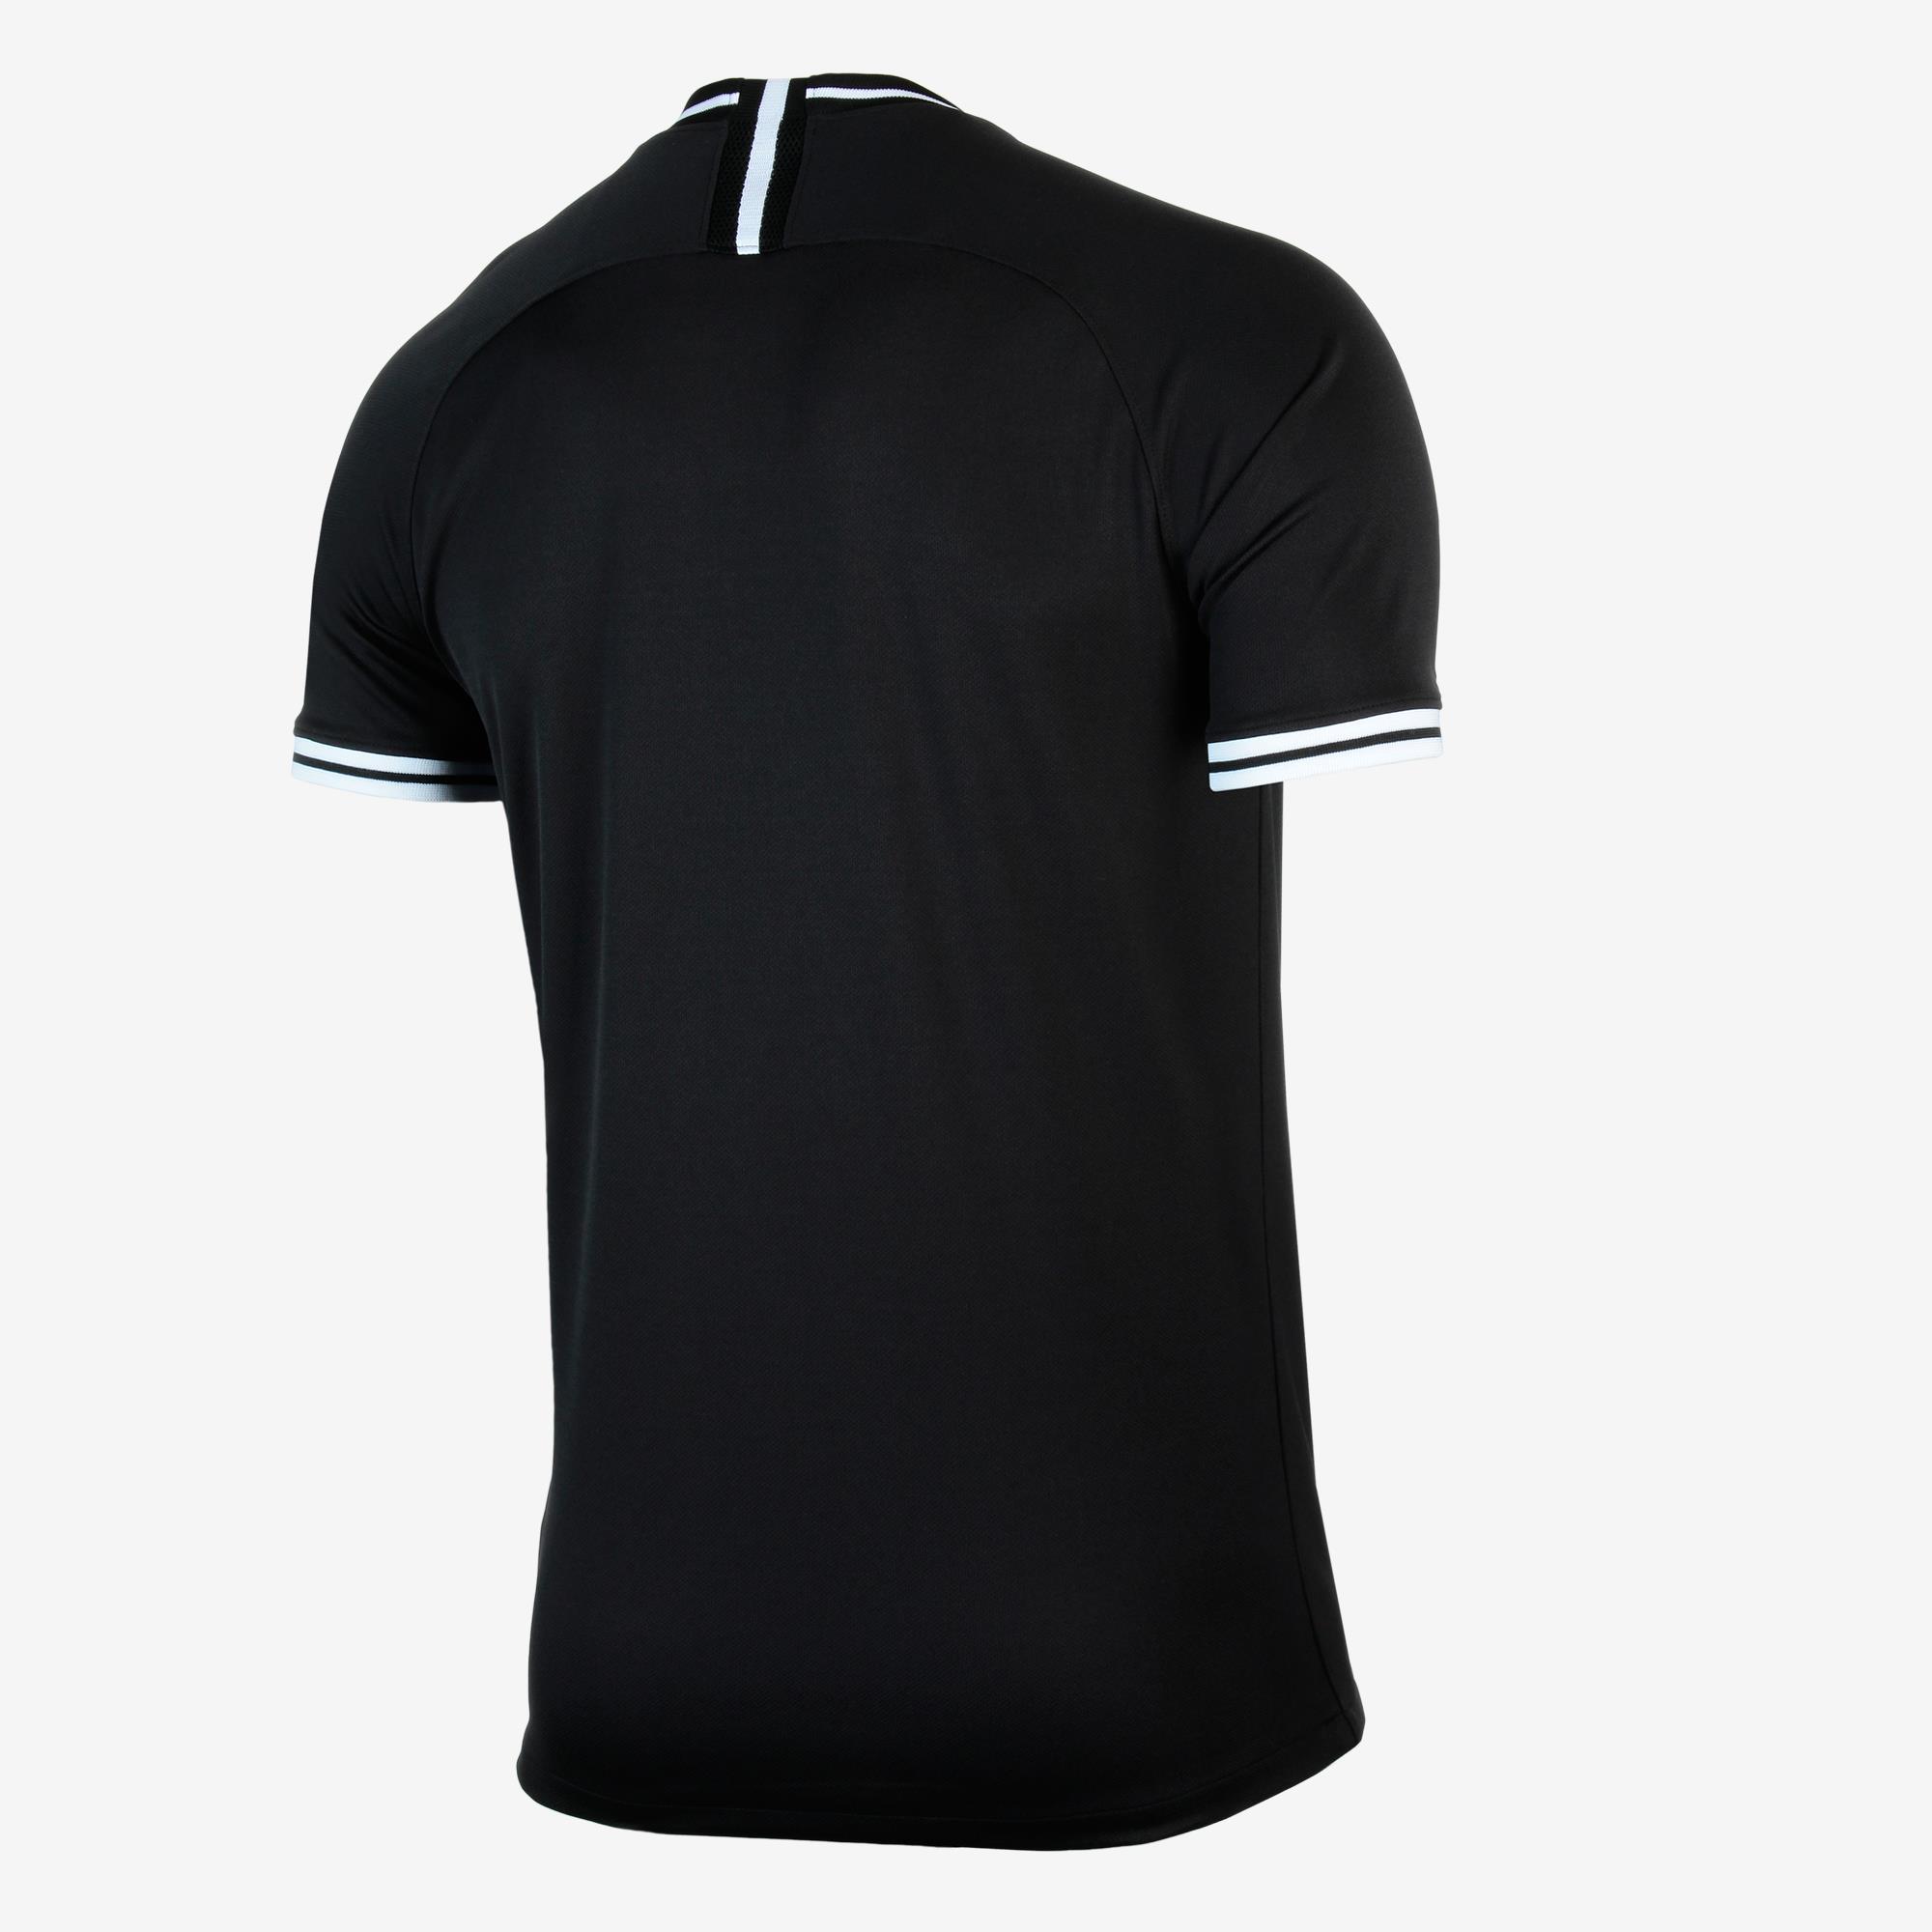 Corinthians 2019-20 Nike Away Kit | 19/20 Kits | Football shirt blog